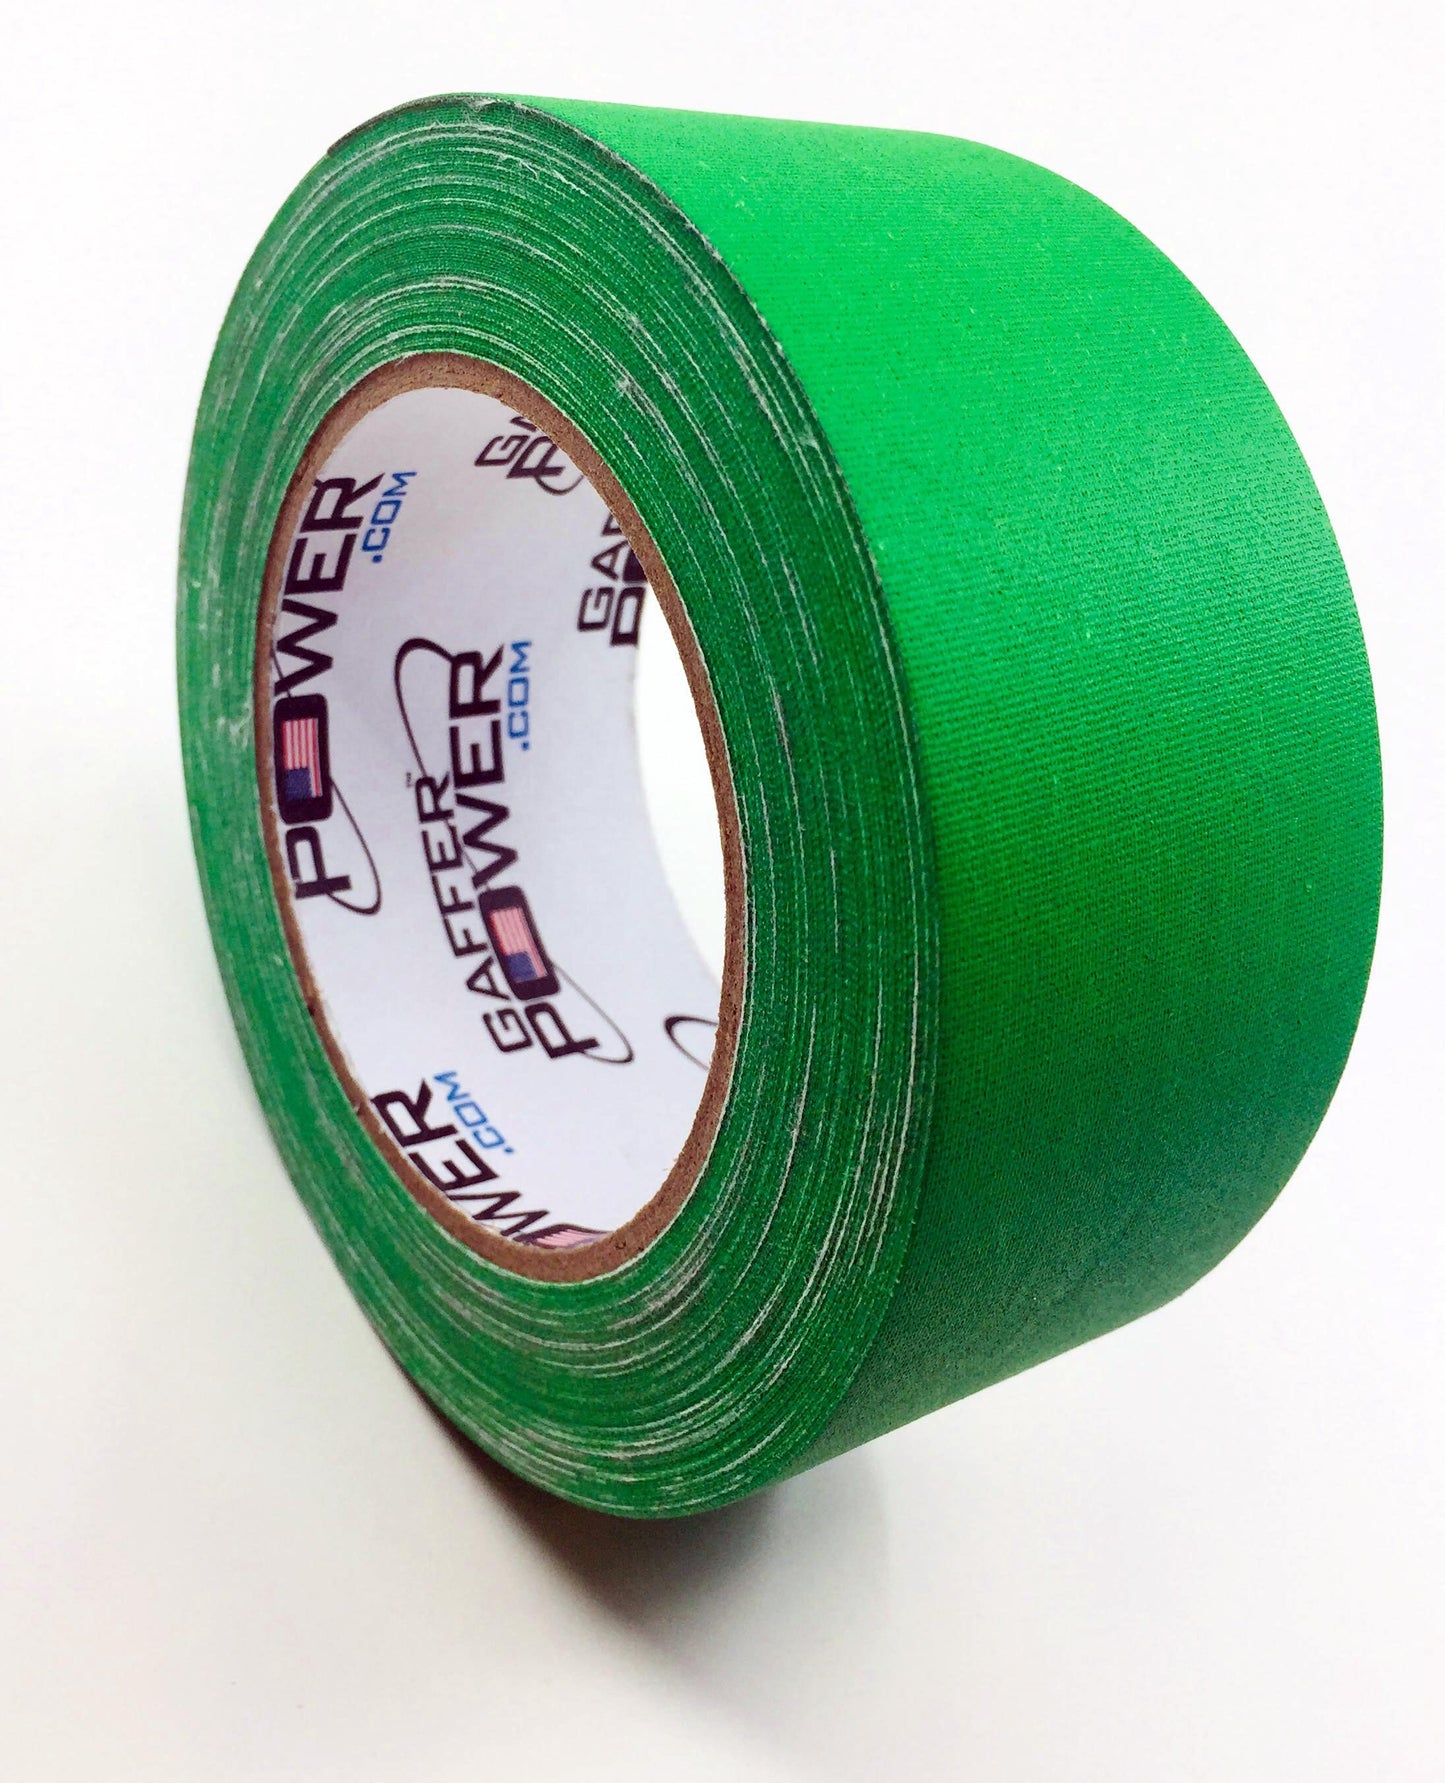 green screen tape, chroma green tape